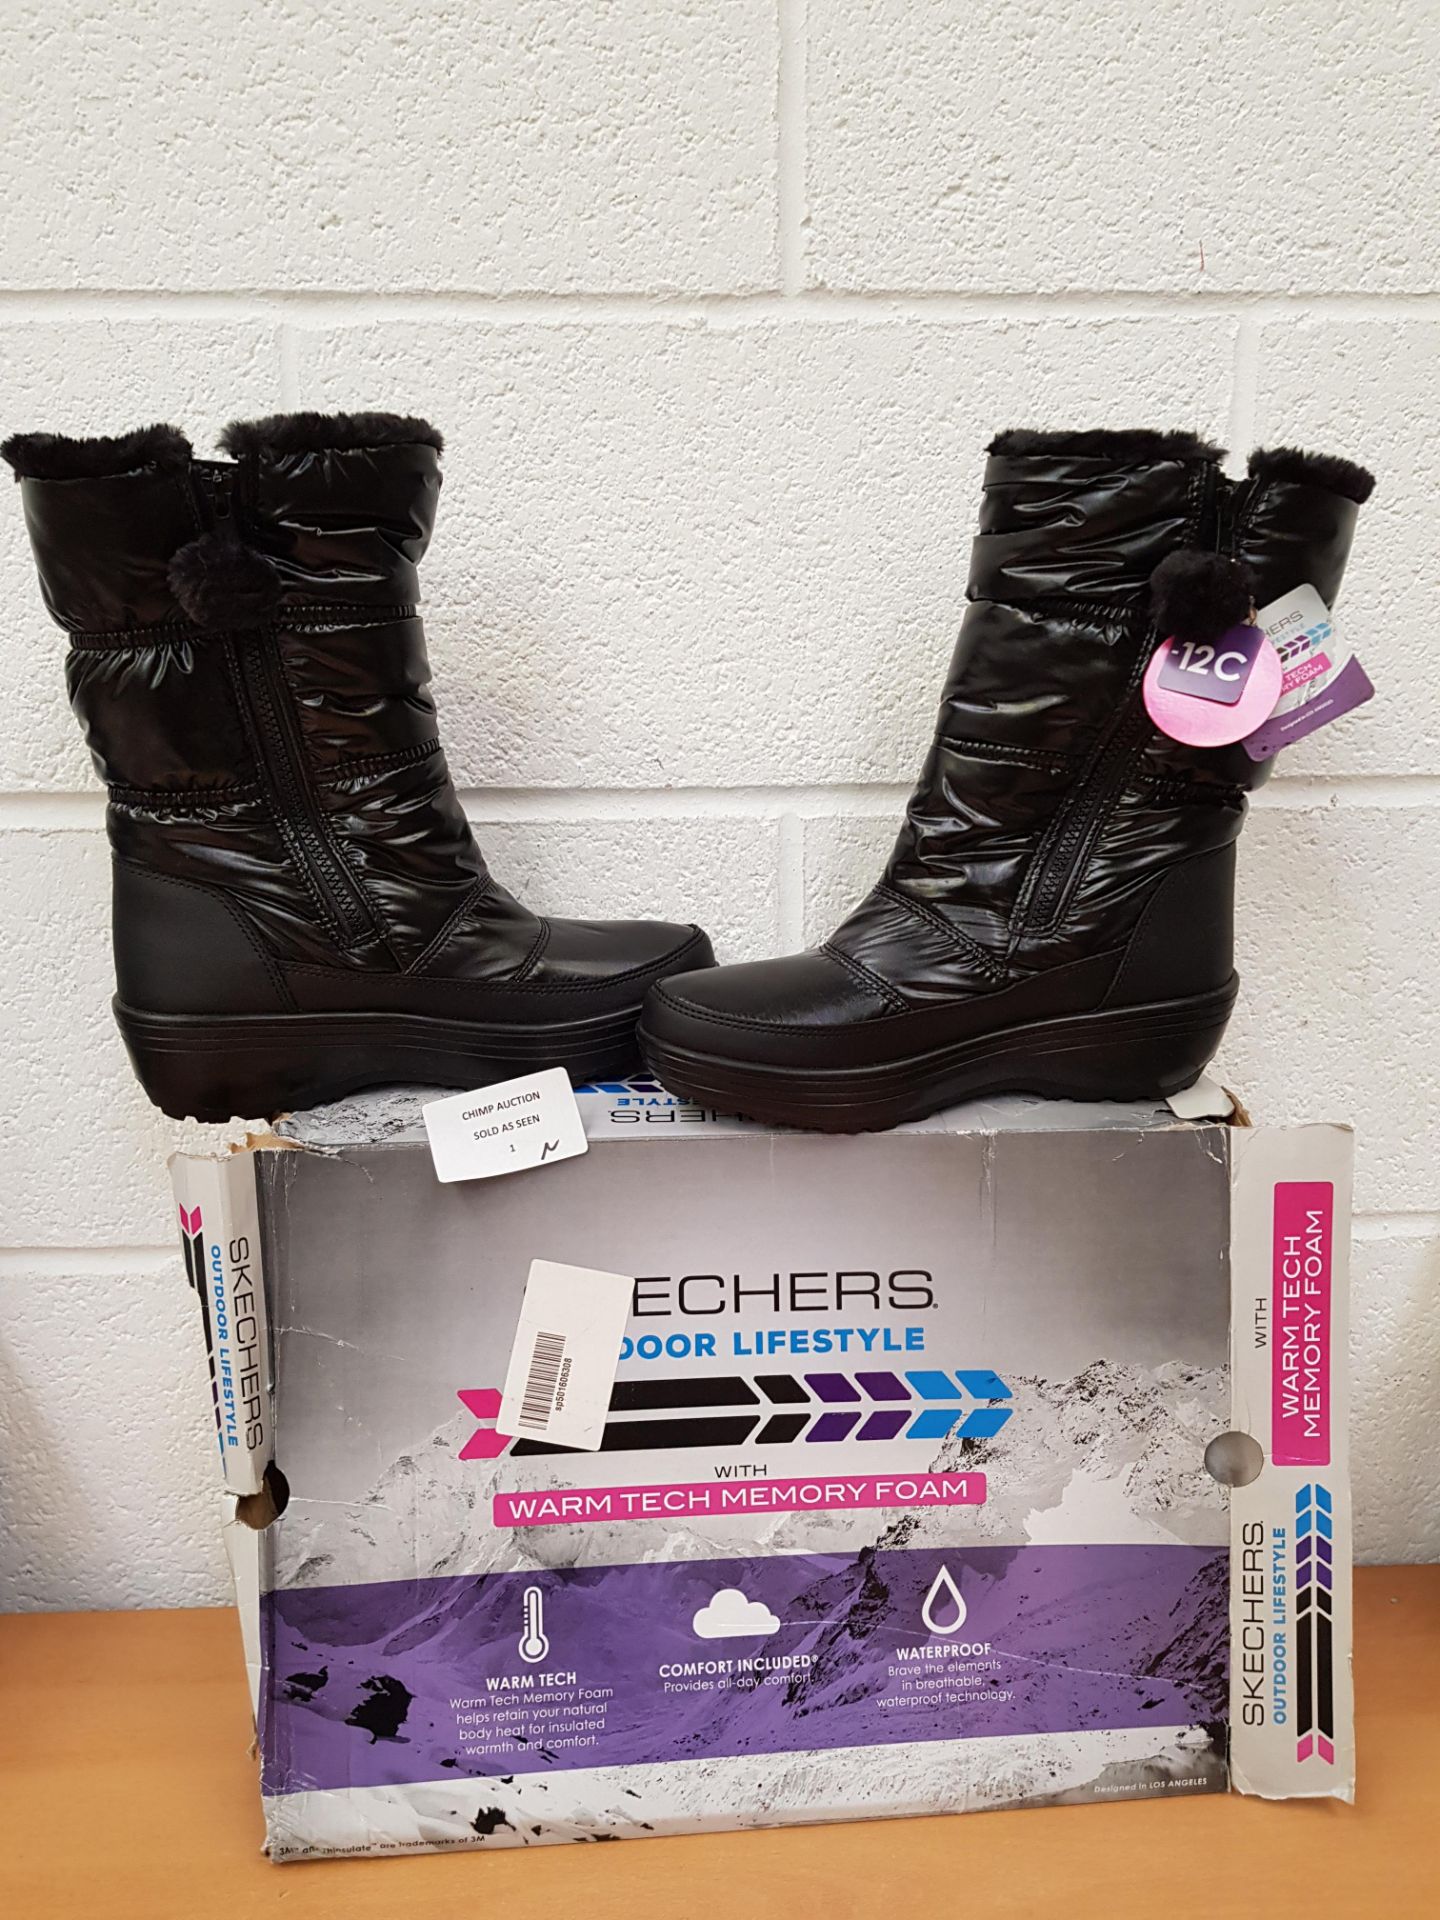 Brand new Skechers Warm Tech Alaska Abyss ladies boots UK 5 RRP £109.99